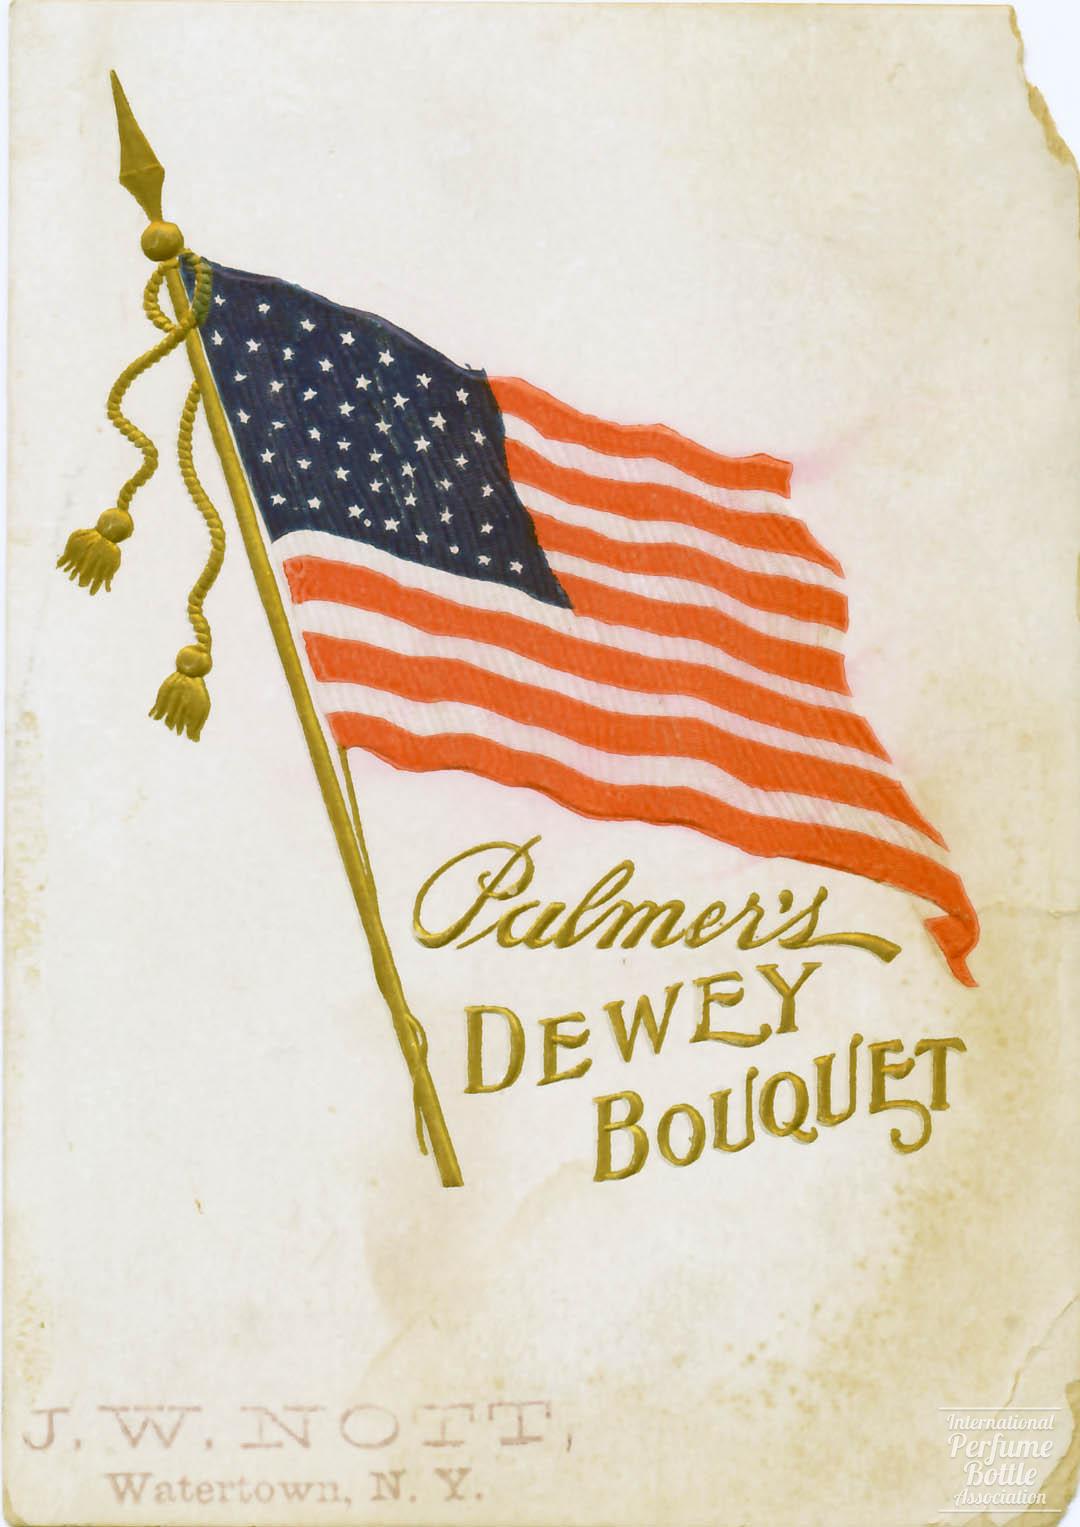 "Dewey Bouquet" Scent Card by Solon Palmer